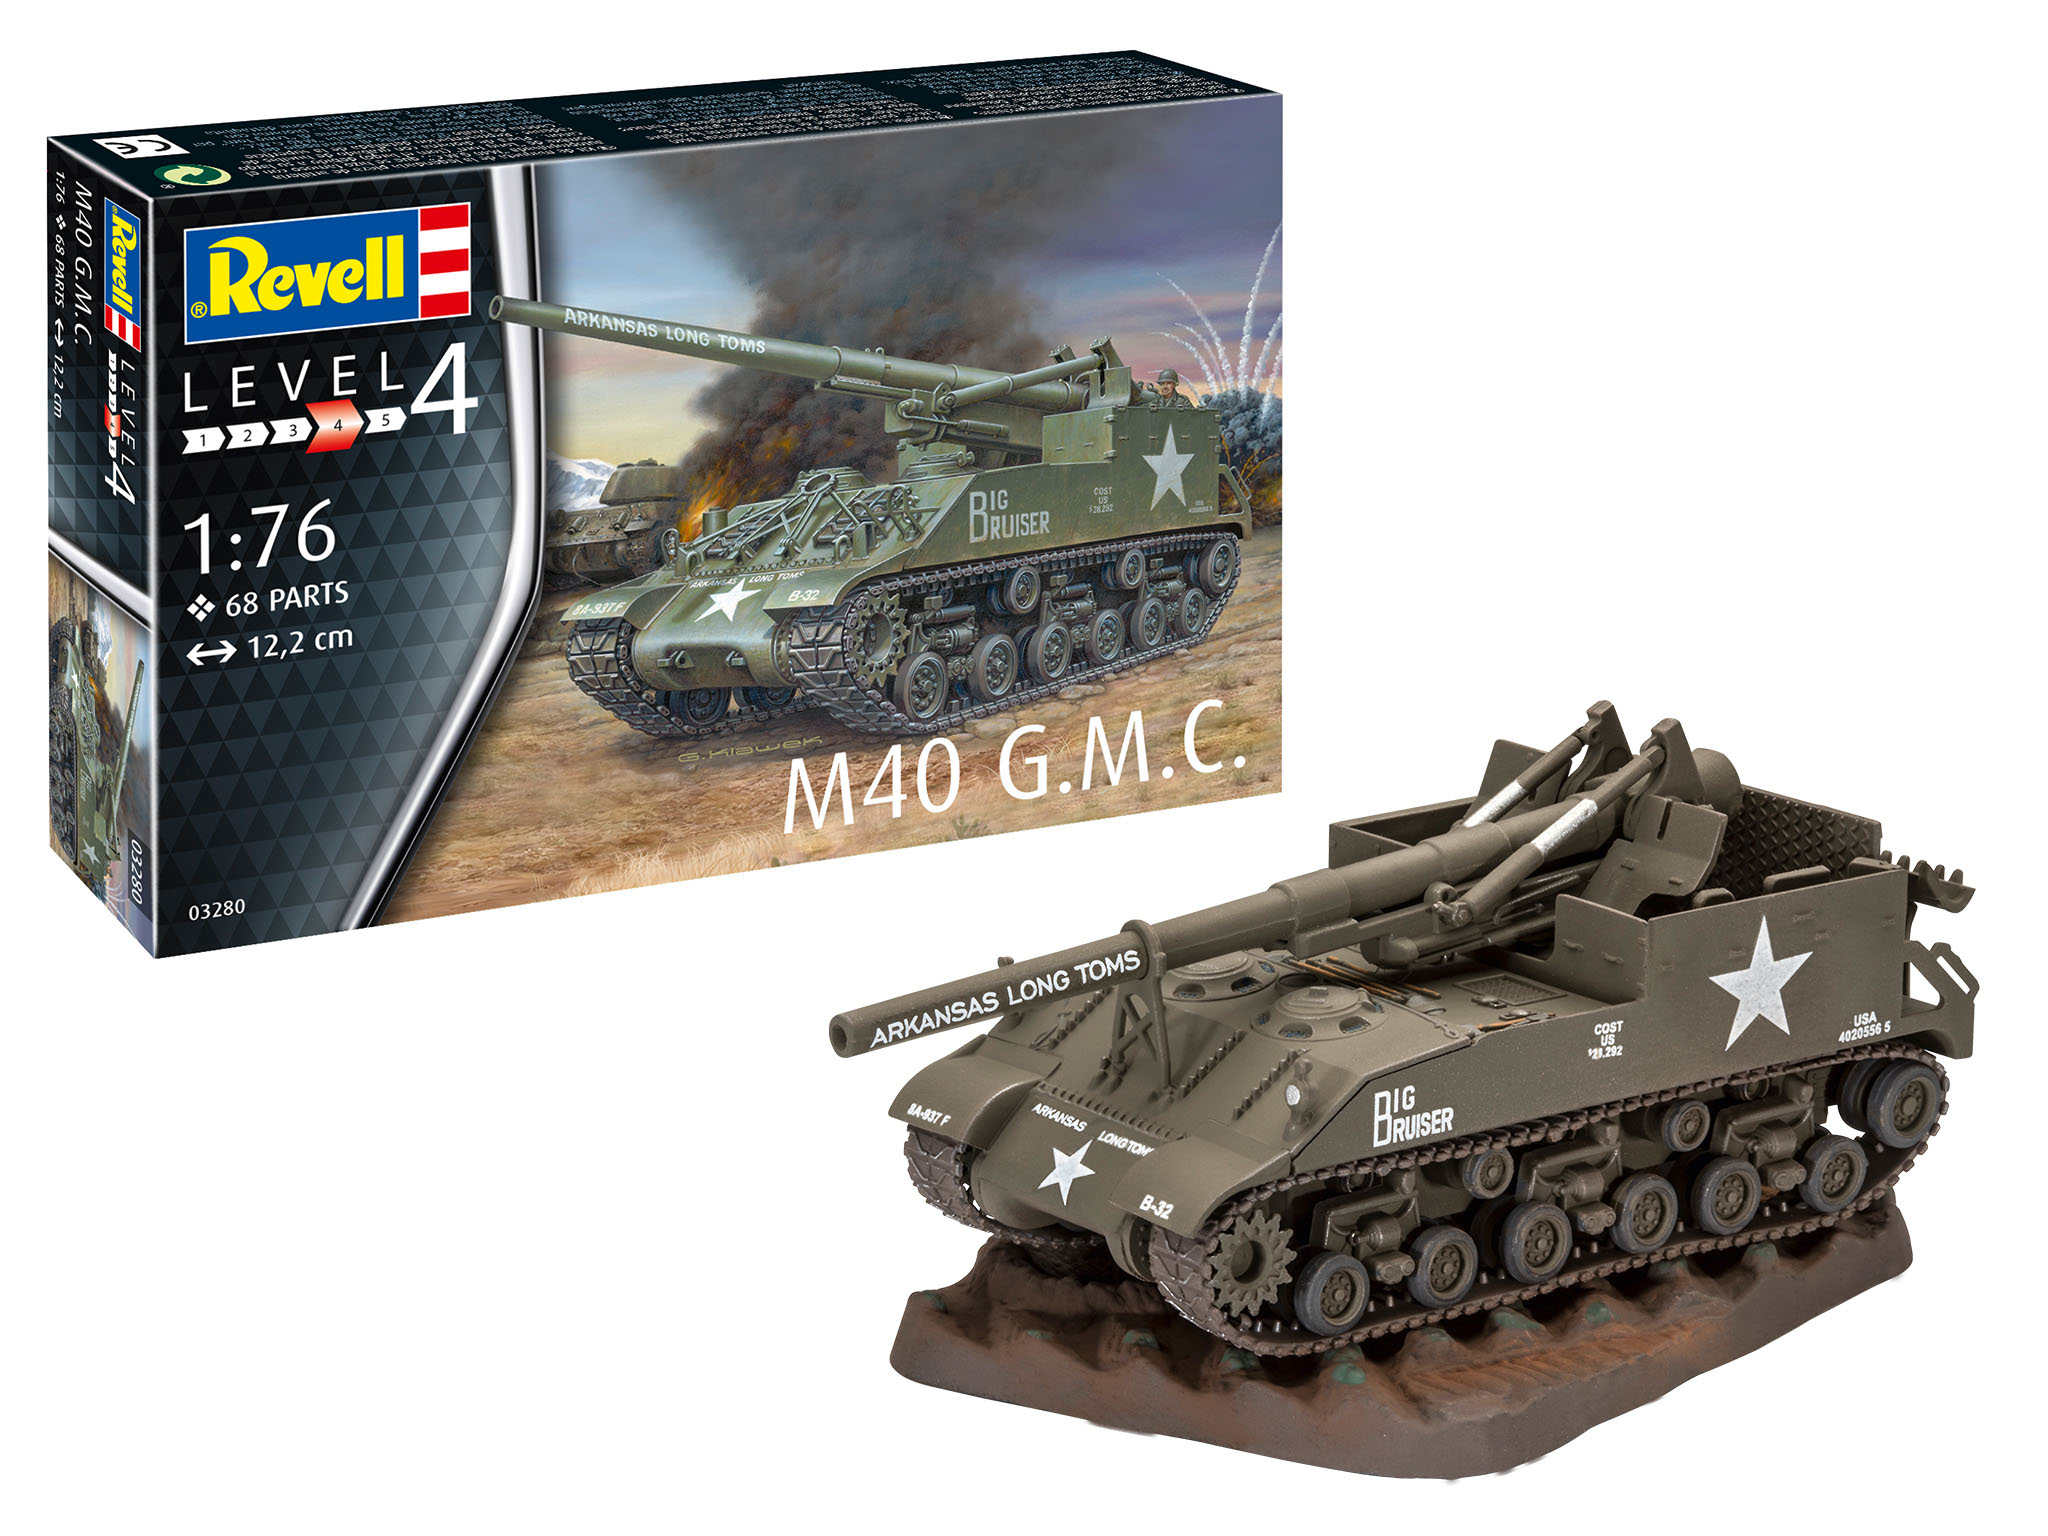 Revell M40 G.M.C in 1:76 bouwpakket